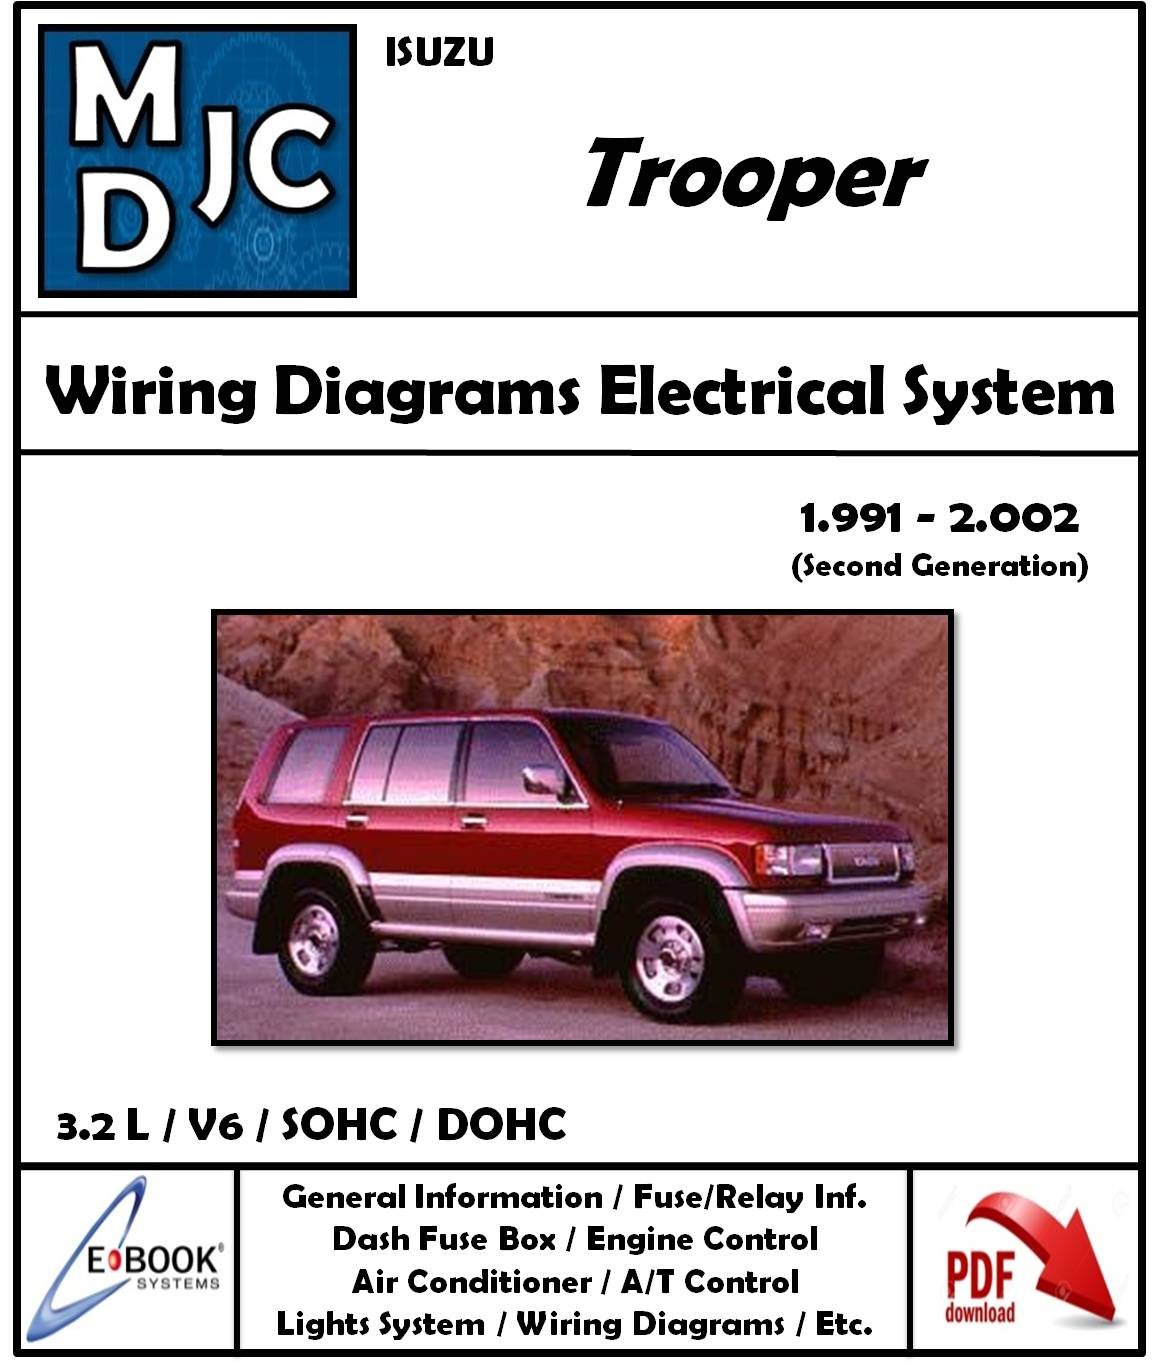 Diagramas Sistema Eléctrico Isuzu Trooper 1991 - 2002